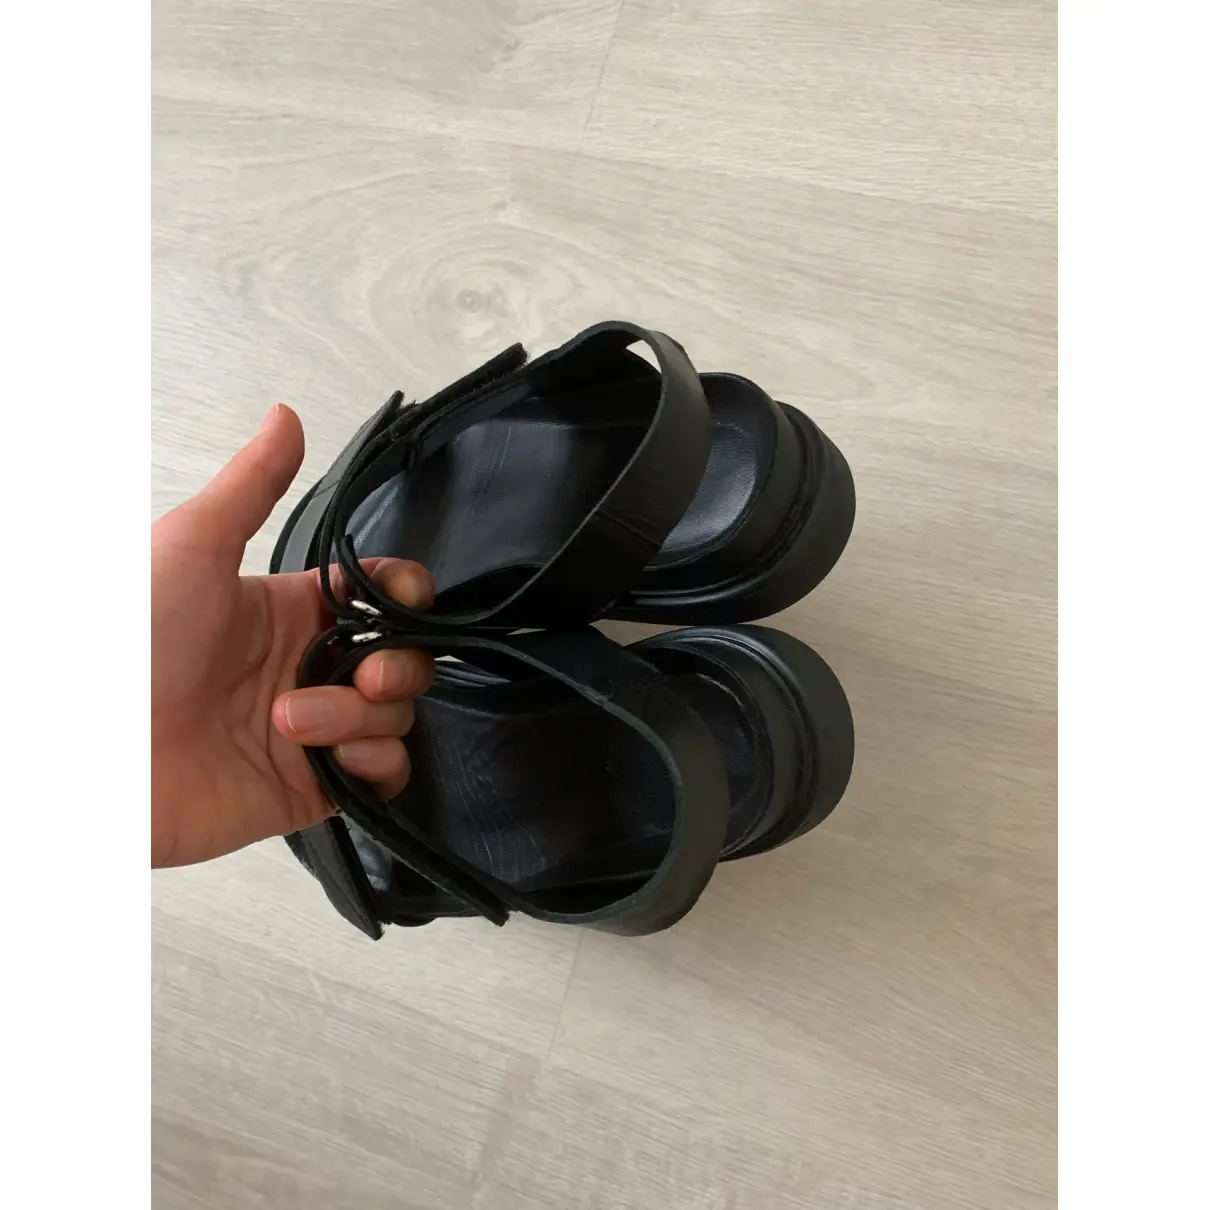 Leather sandals Vagabond